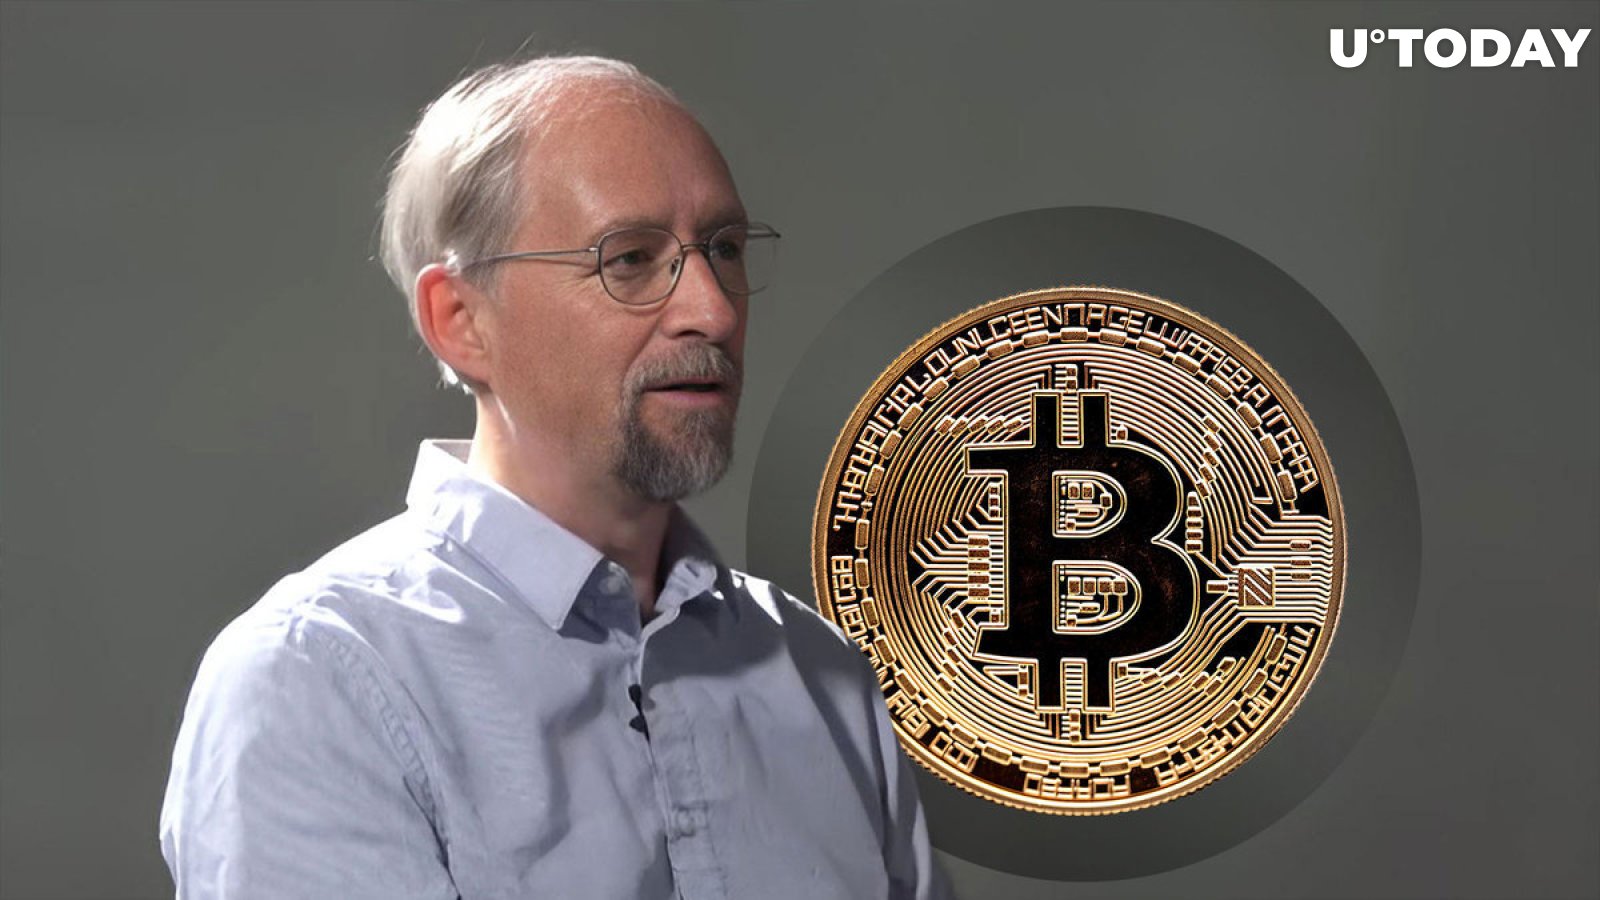  Bitcoin Price: $100K Is Overdue, Adam Back Says